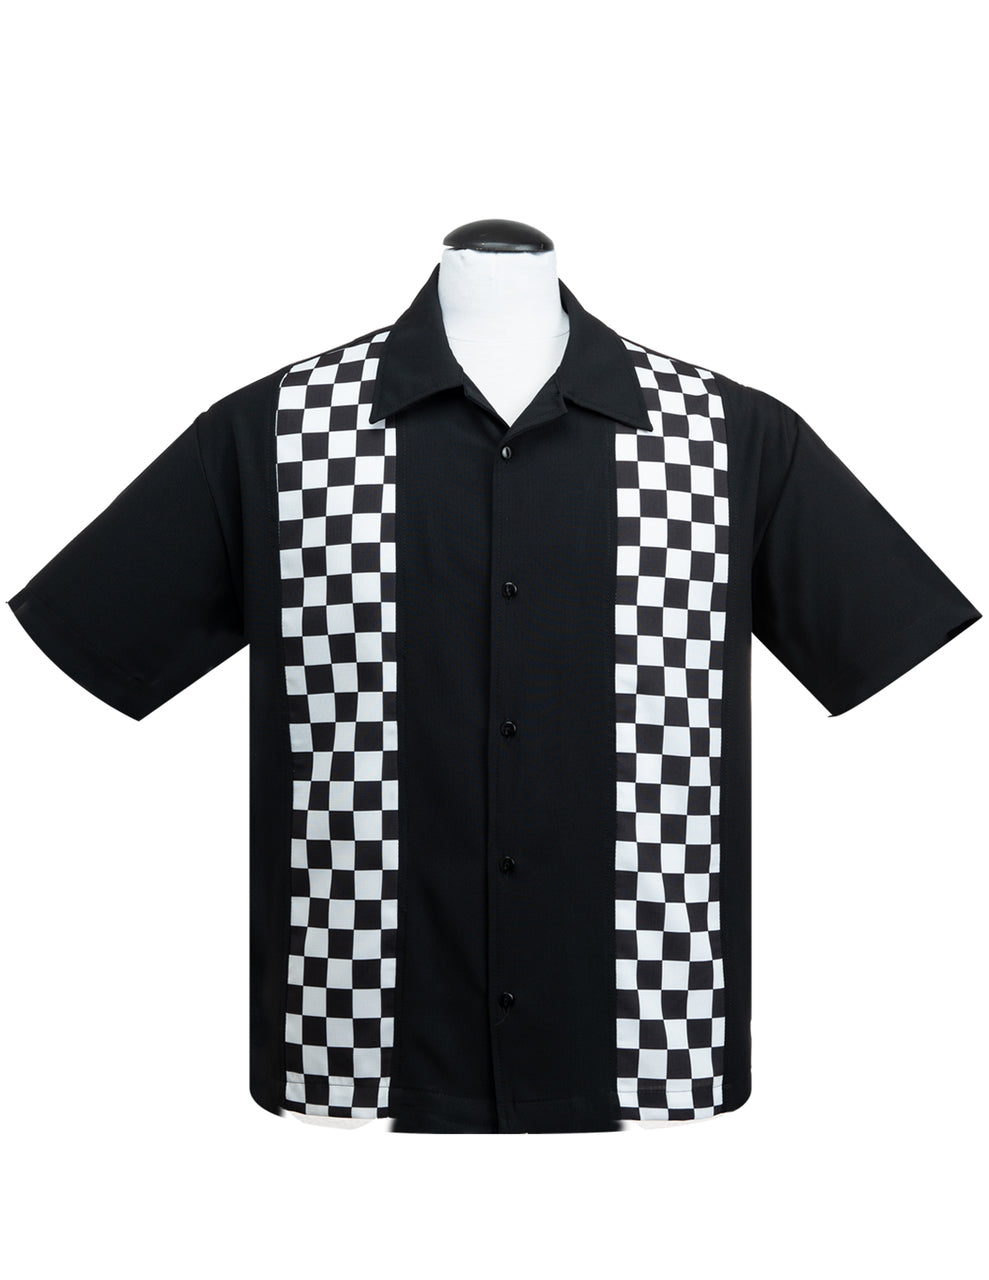 Checkered Mini Panel Bowling Shirt in Black/White